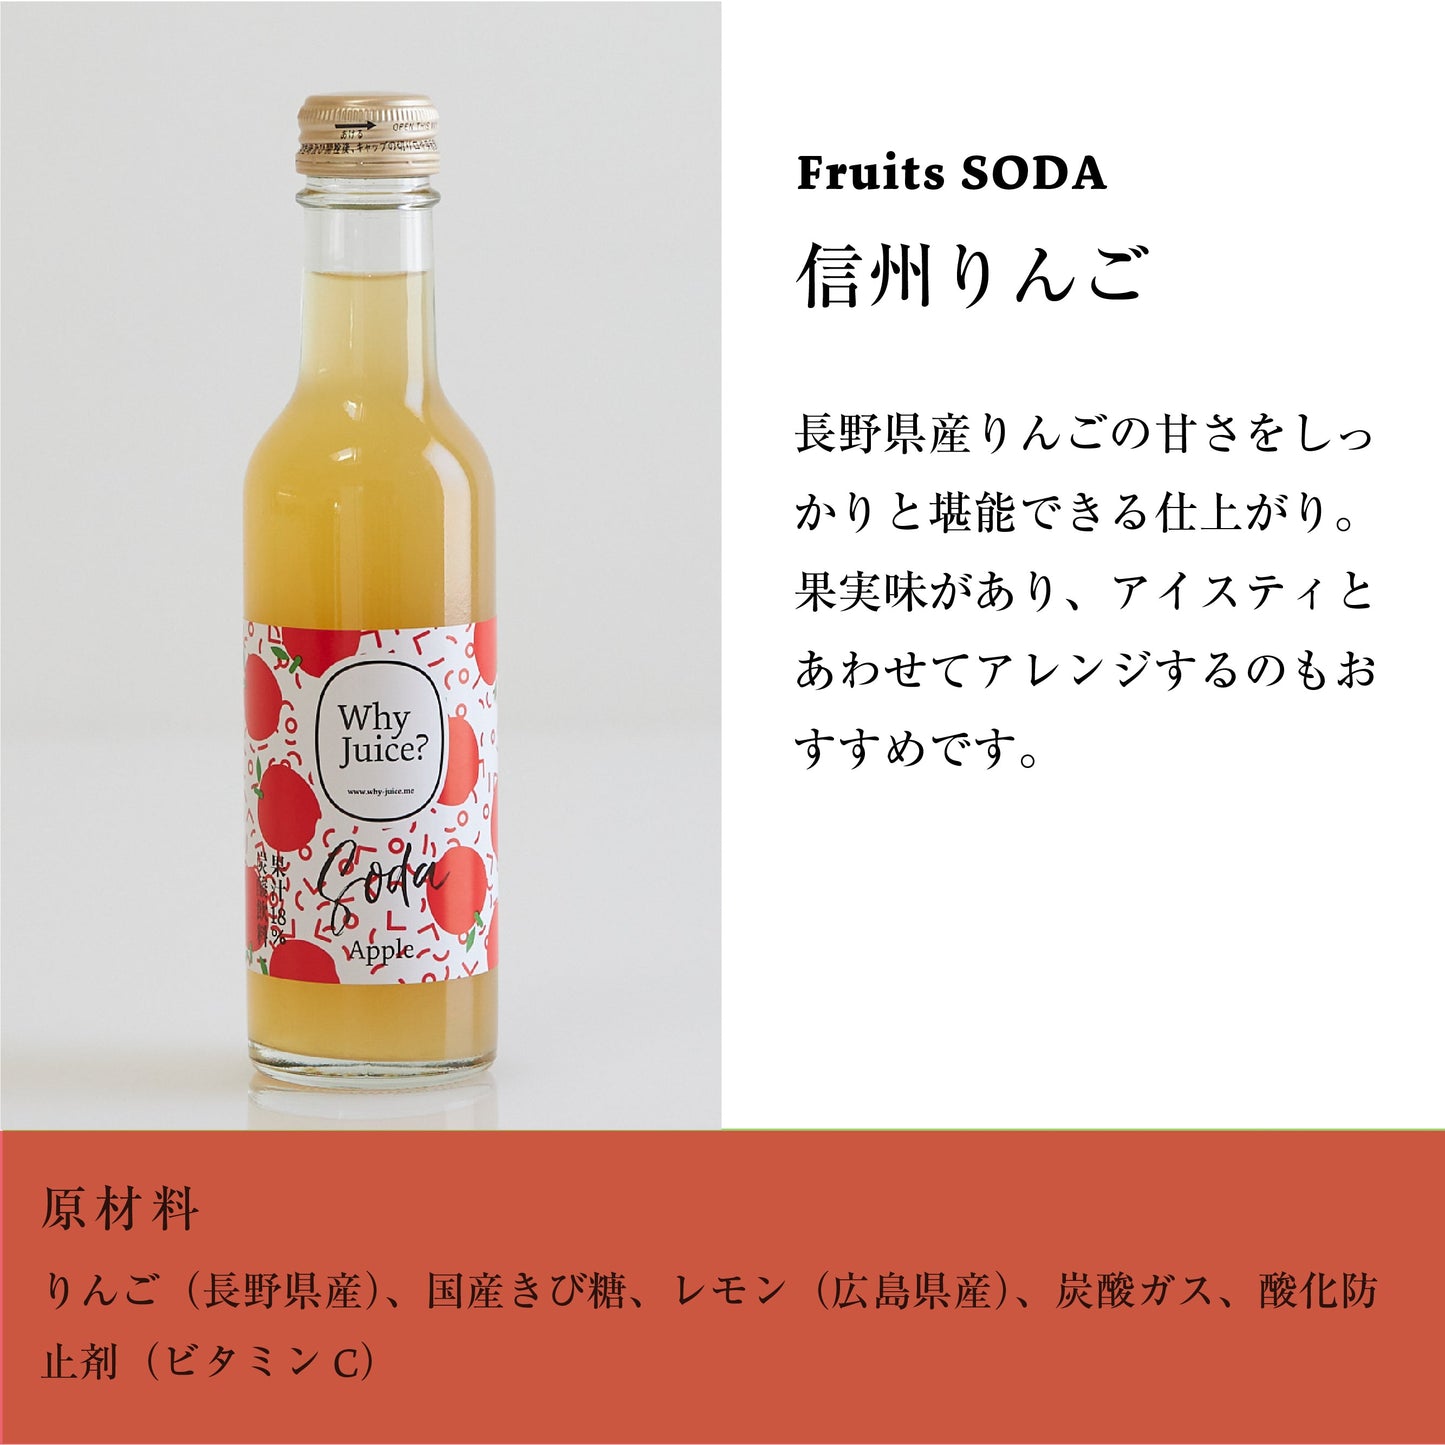 Fruits SODA 3種類ミックスセット (30本入)